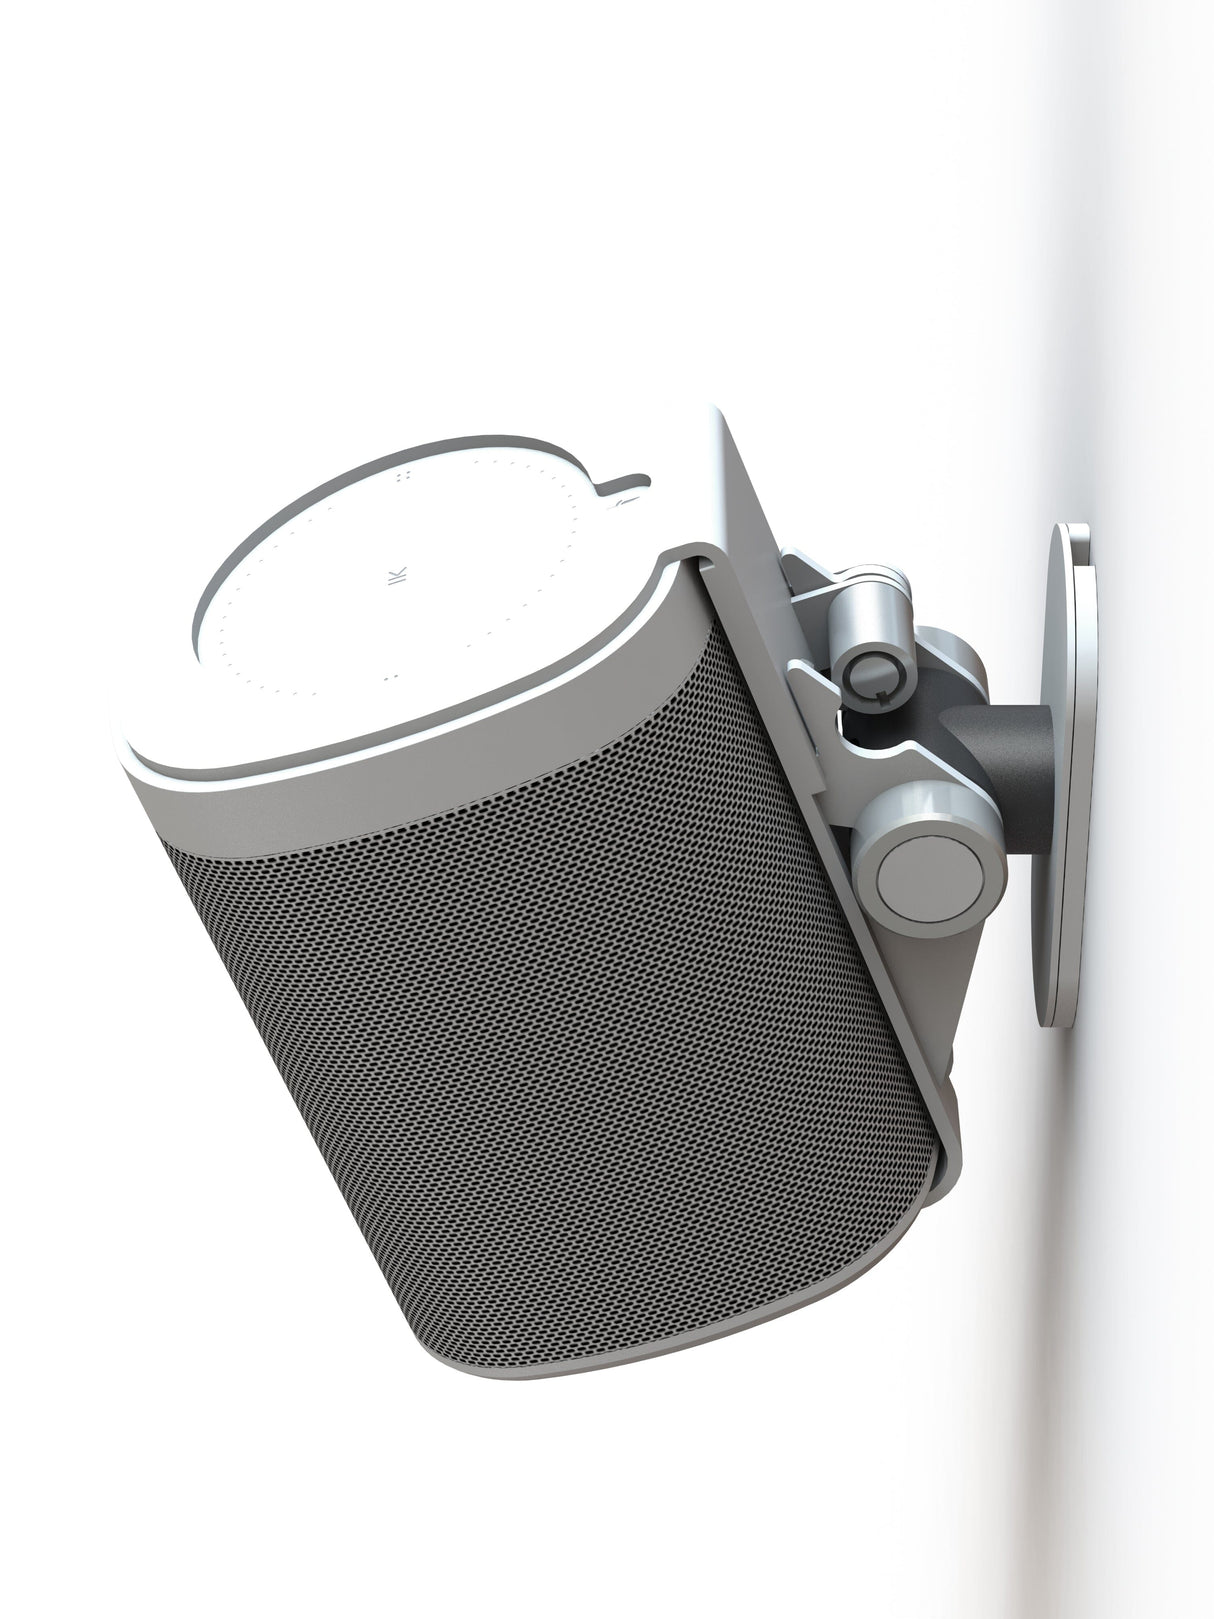 Mountson Wall Mount For Sonos One With Security Lock Tilt & Swivel - K&B Audio